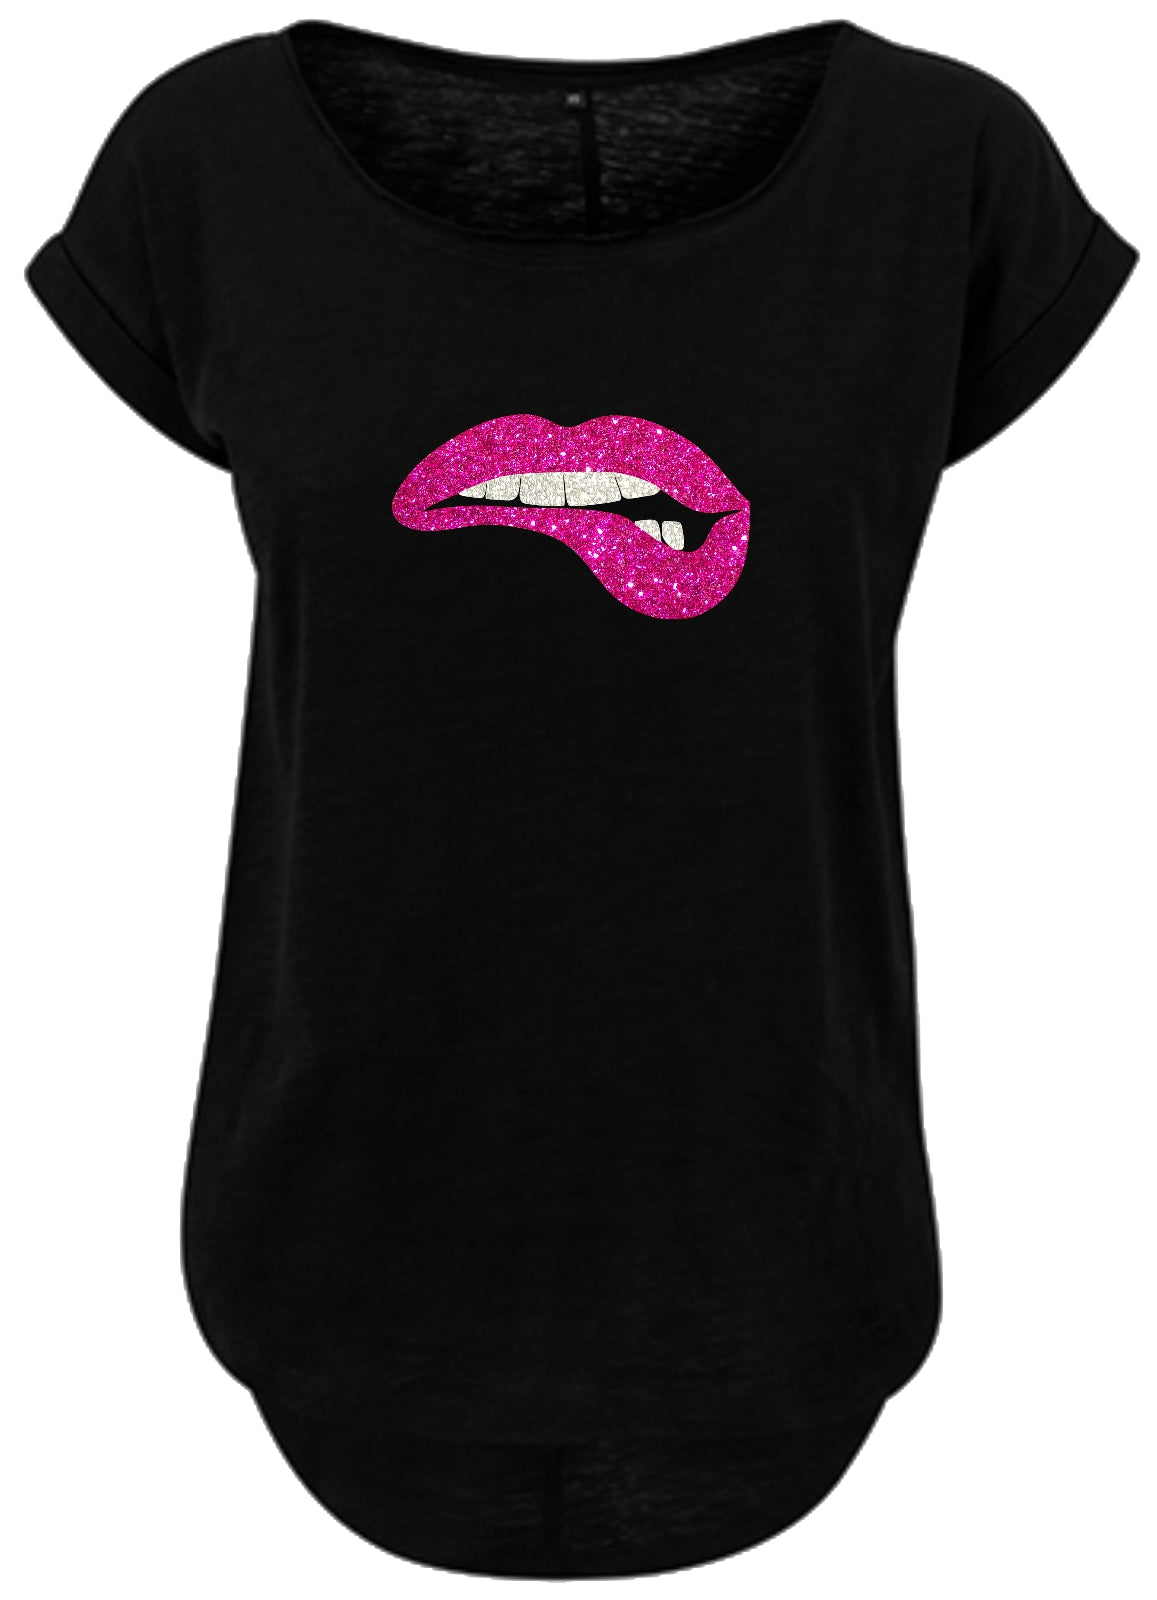 Blingeling®Shirts Damen T-Shirt   Glitzer Party  Kussmund pink sexy Lips Bite